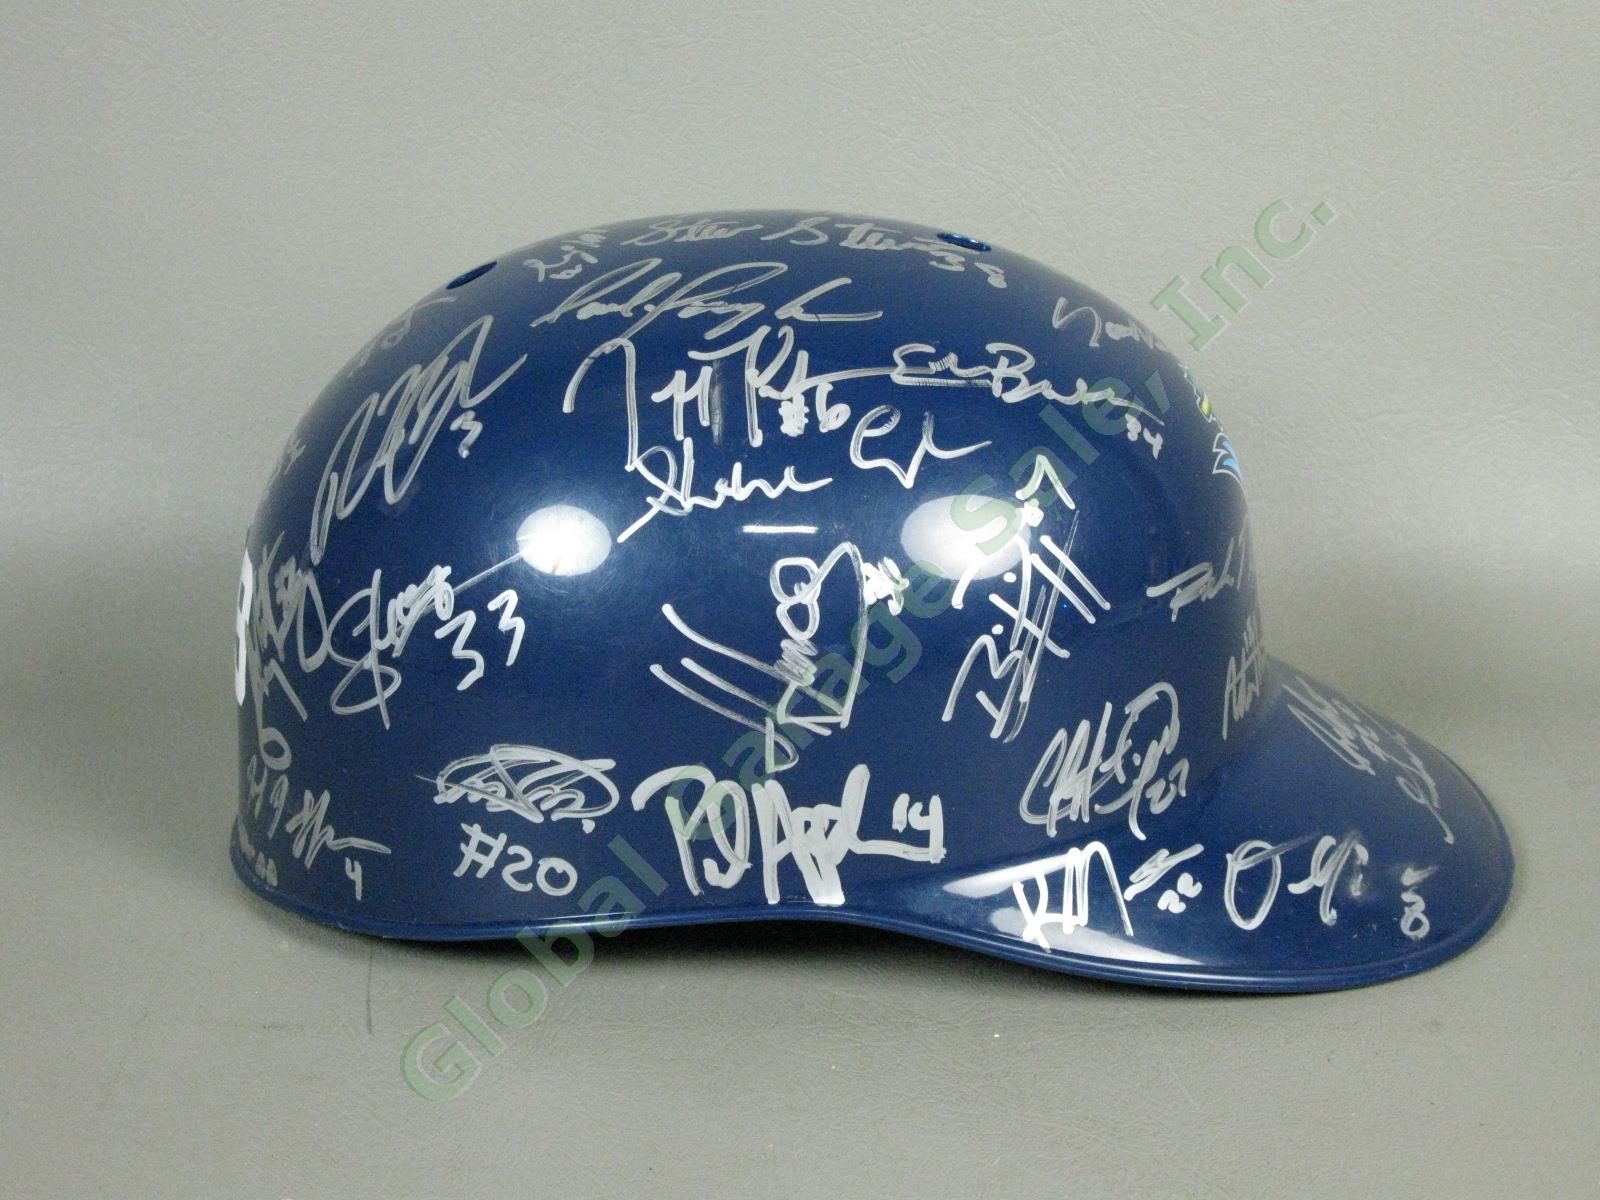 2009 Vermont Lake Monsters Team Signed Baseball Helmet NYPL Washington Nationals 1